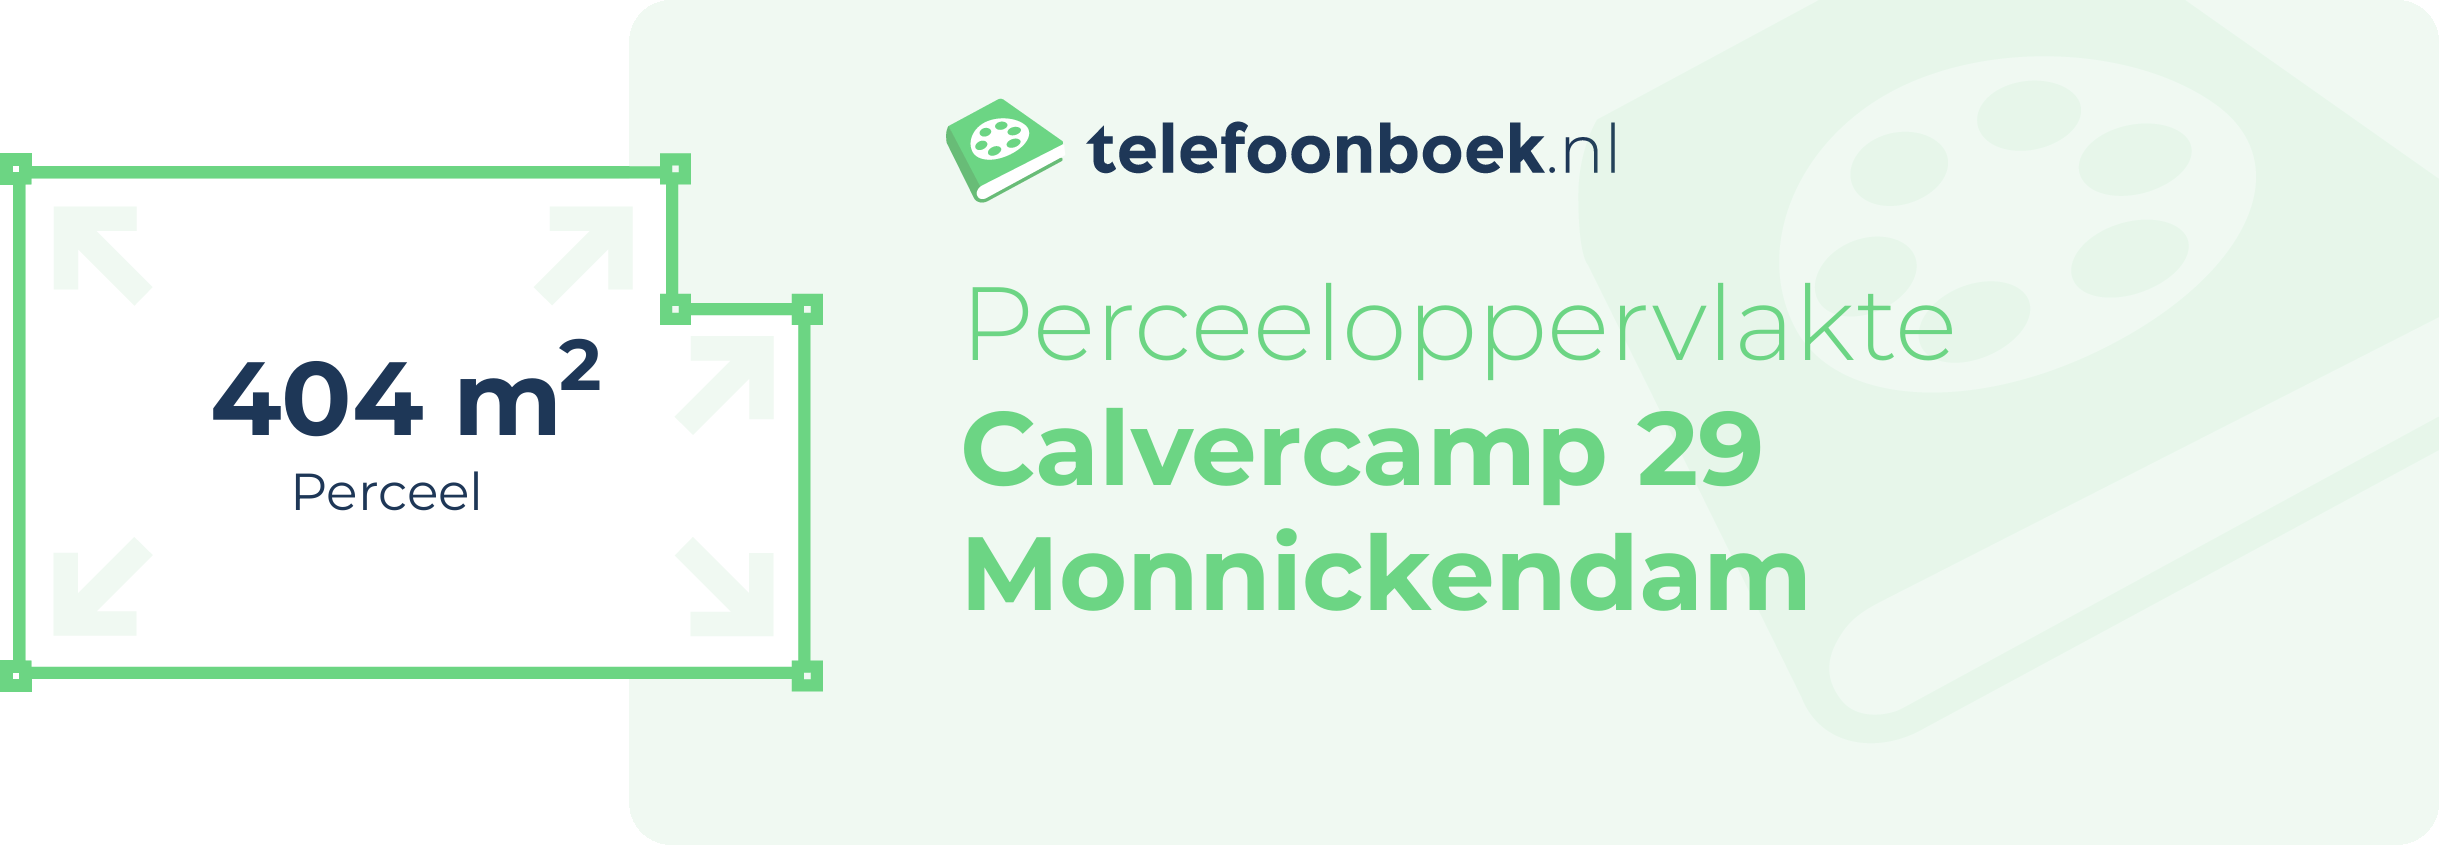 Perceeloppervlakte Calvercamp 29 Monnickendam